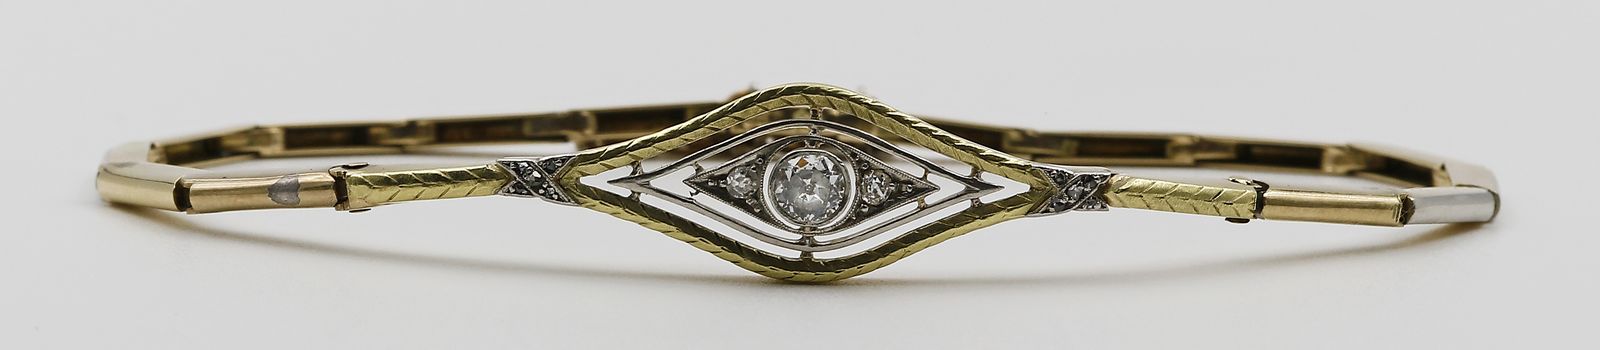 Art Deco-Diamantarmband.